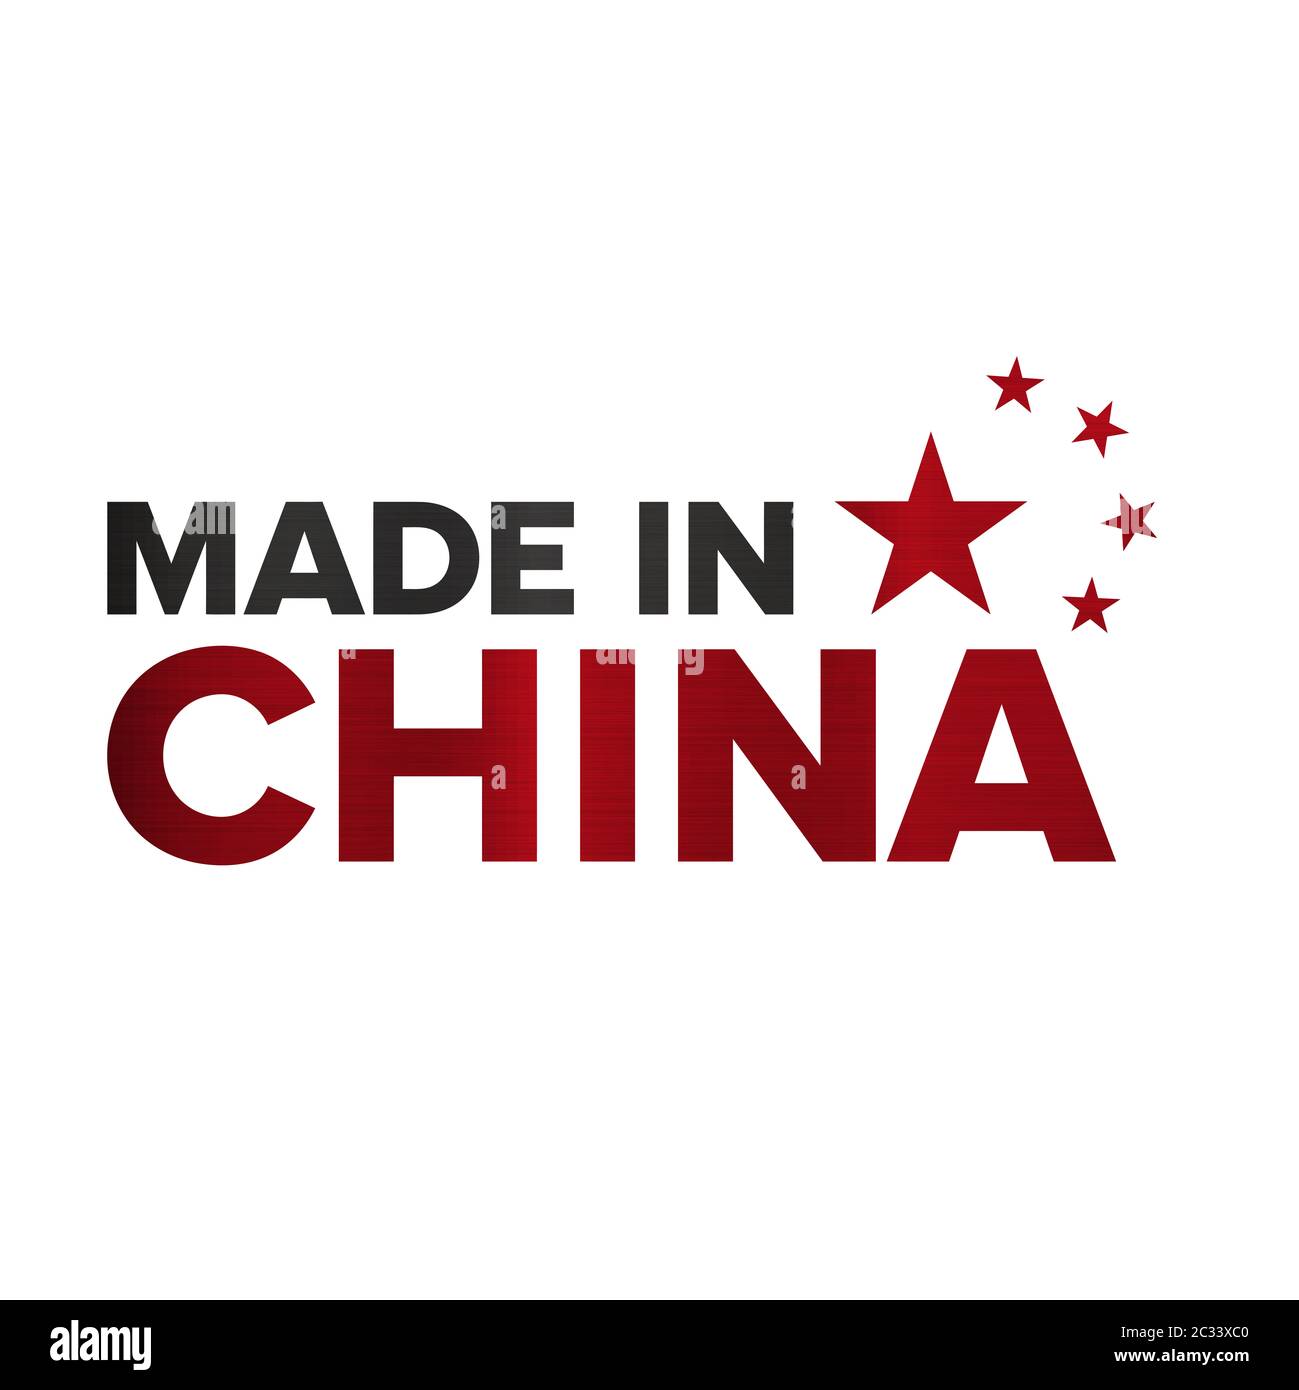 Made in china. Надпись made in China. Мэйд ин чина. Made in China без фона.